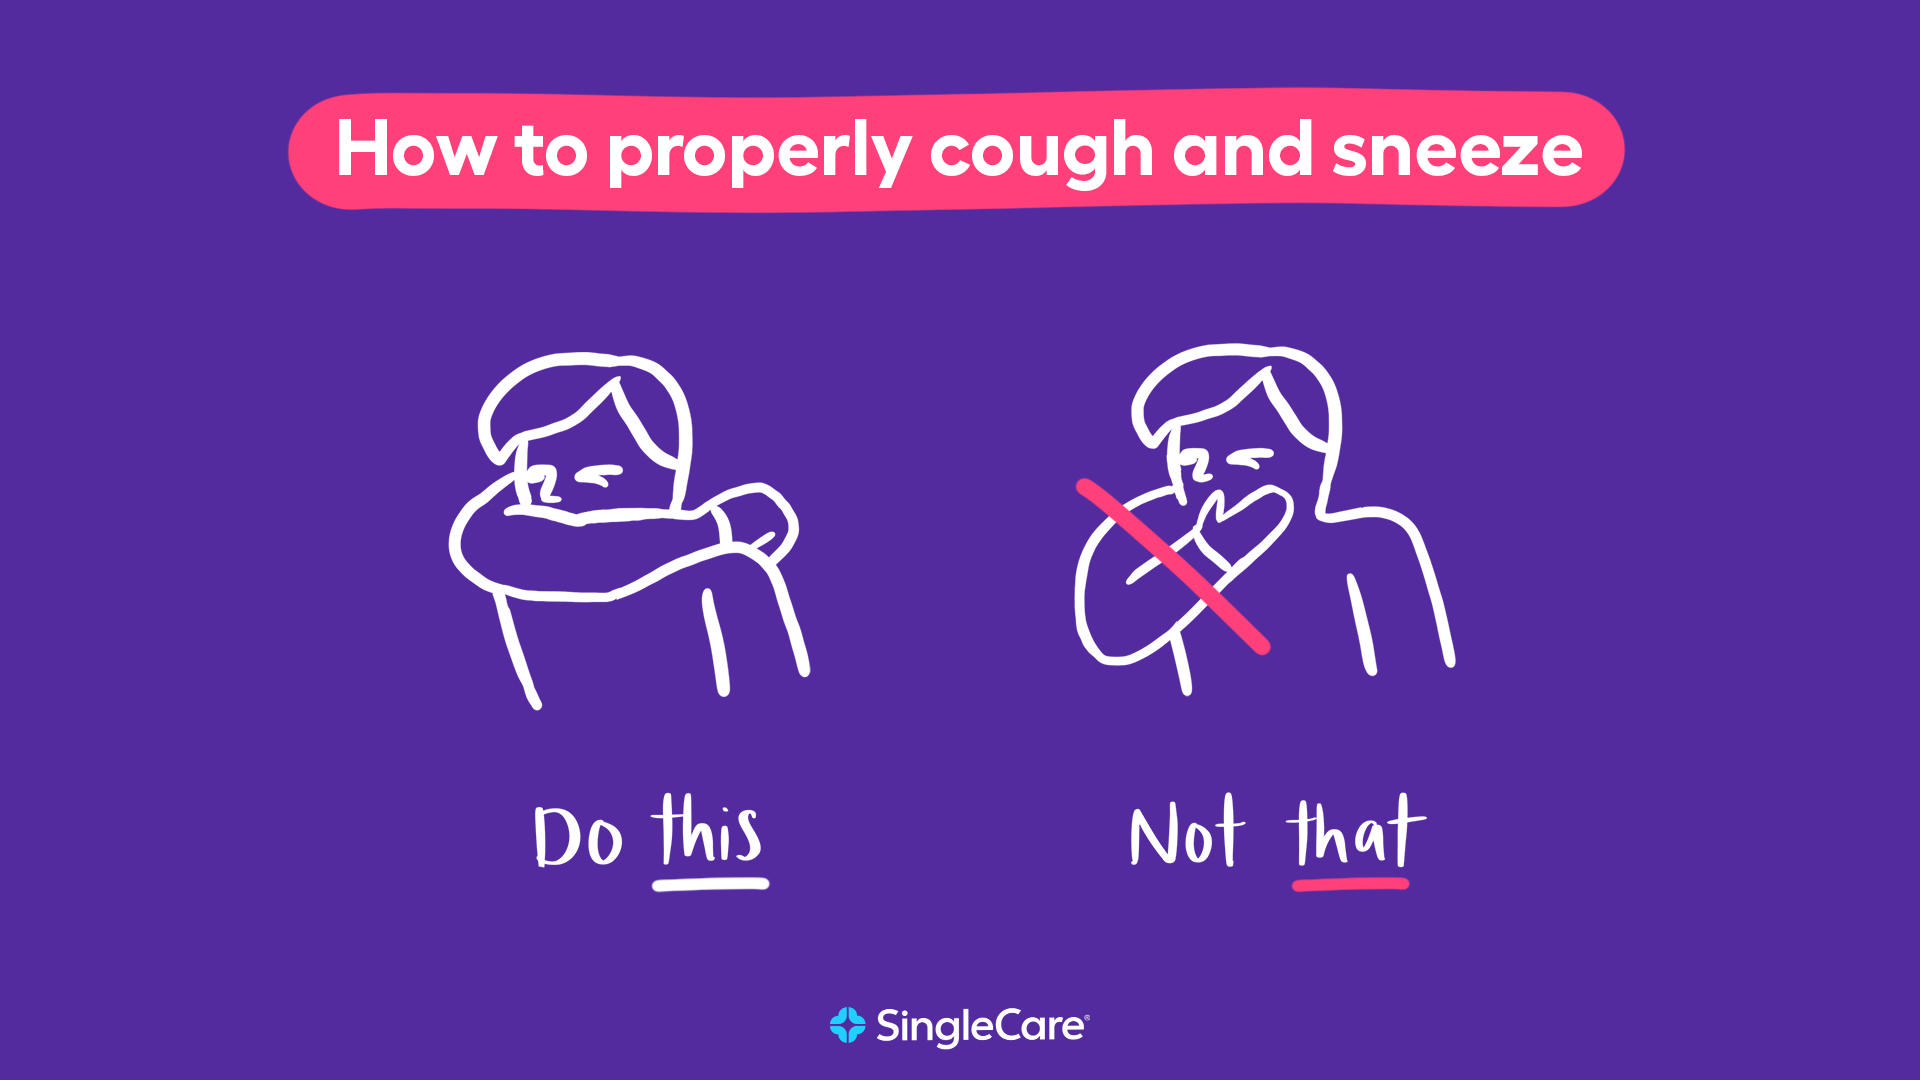 Respiratory hygiene tip: Avoid coronavirus transmission by practicing the vampire cough method